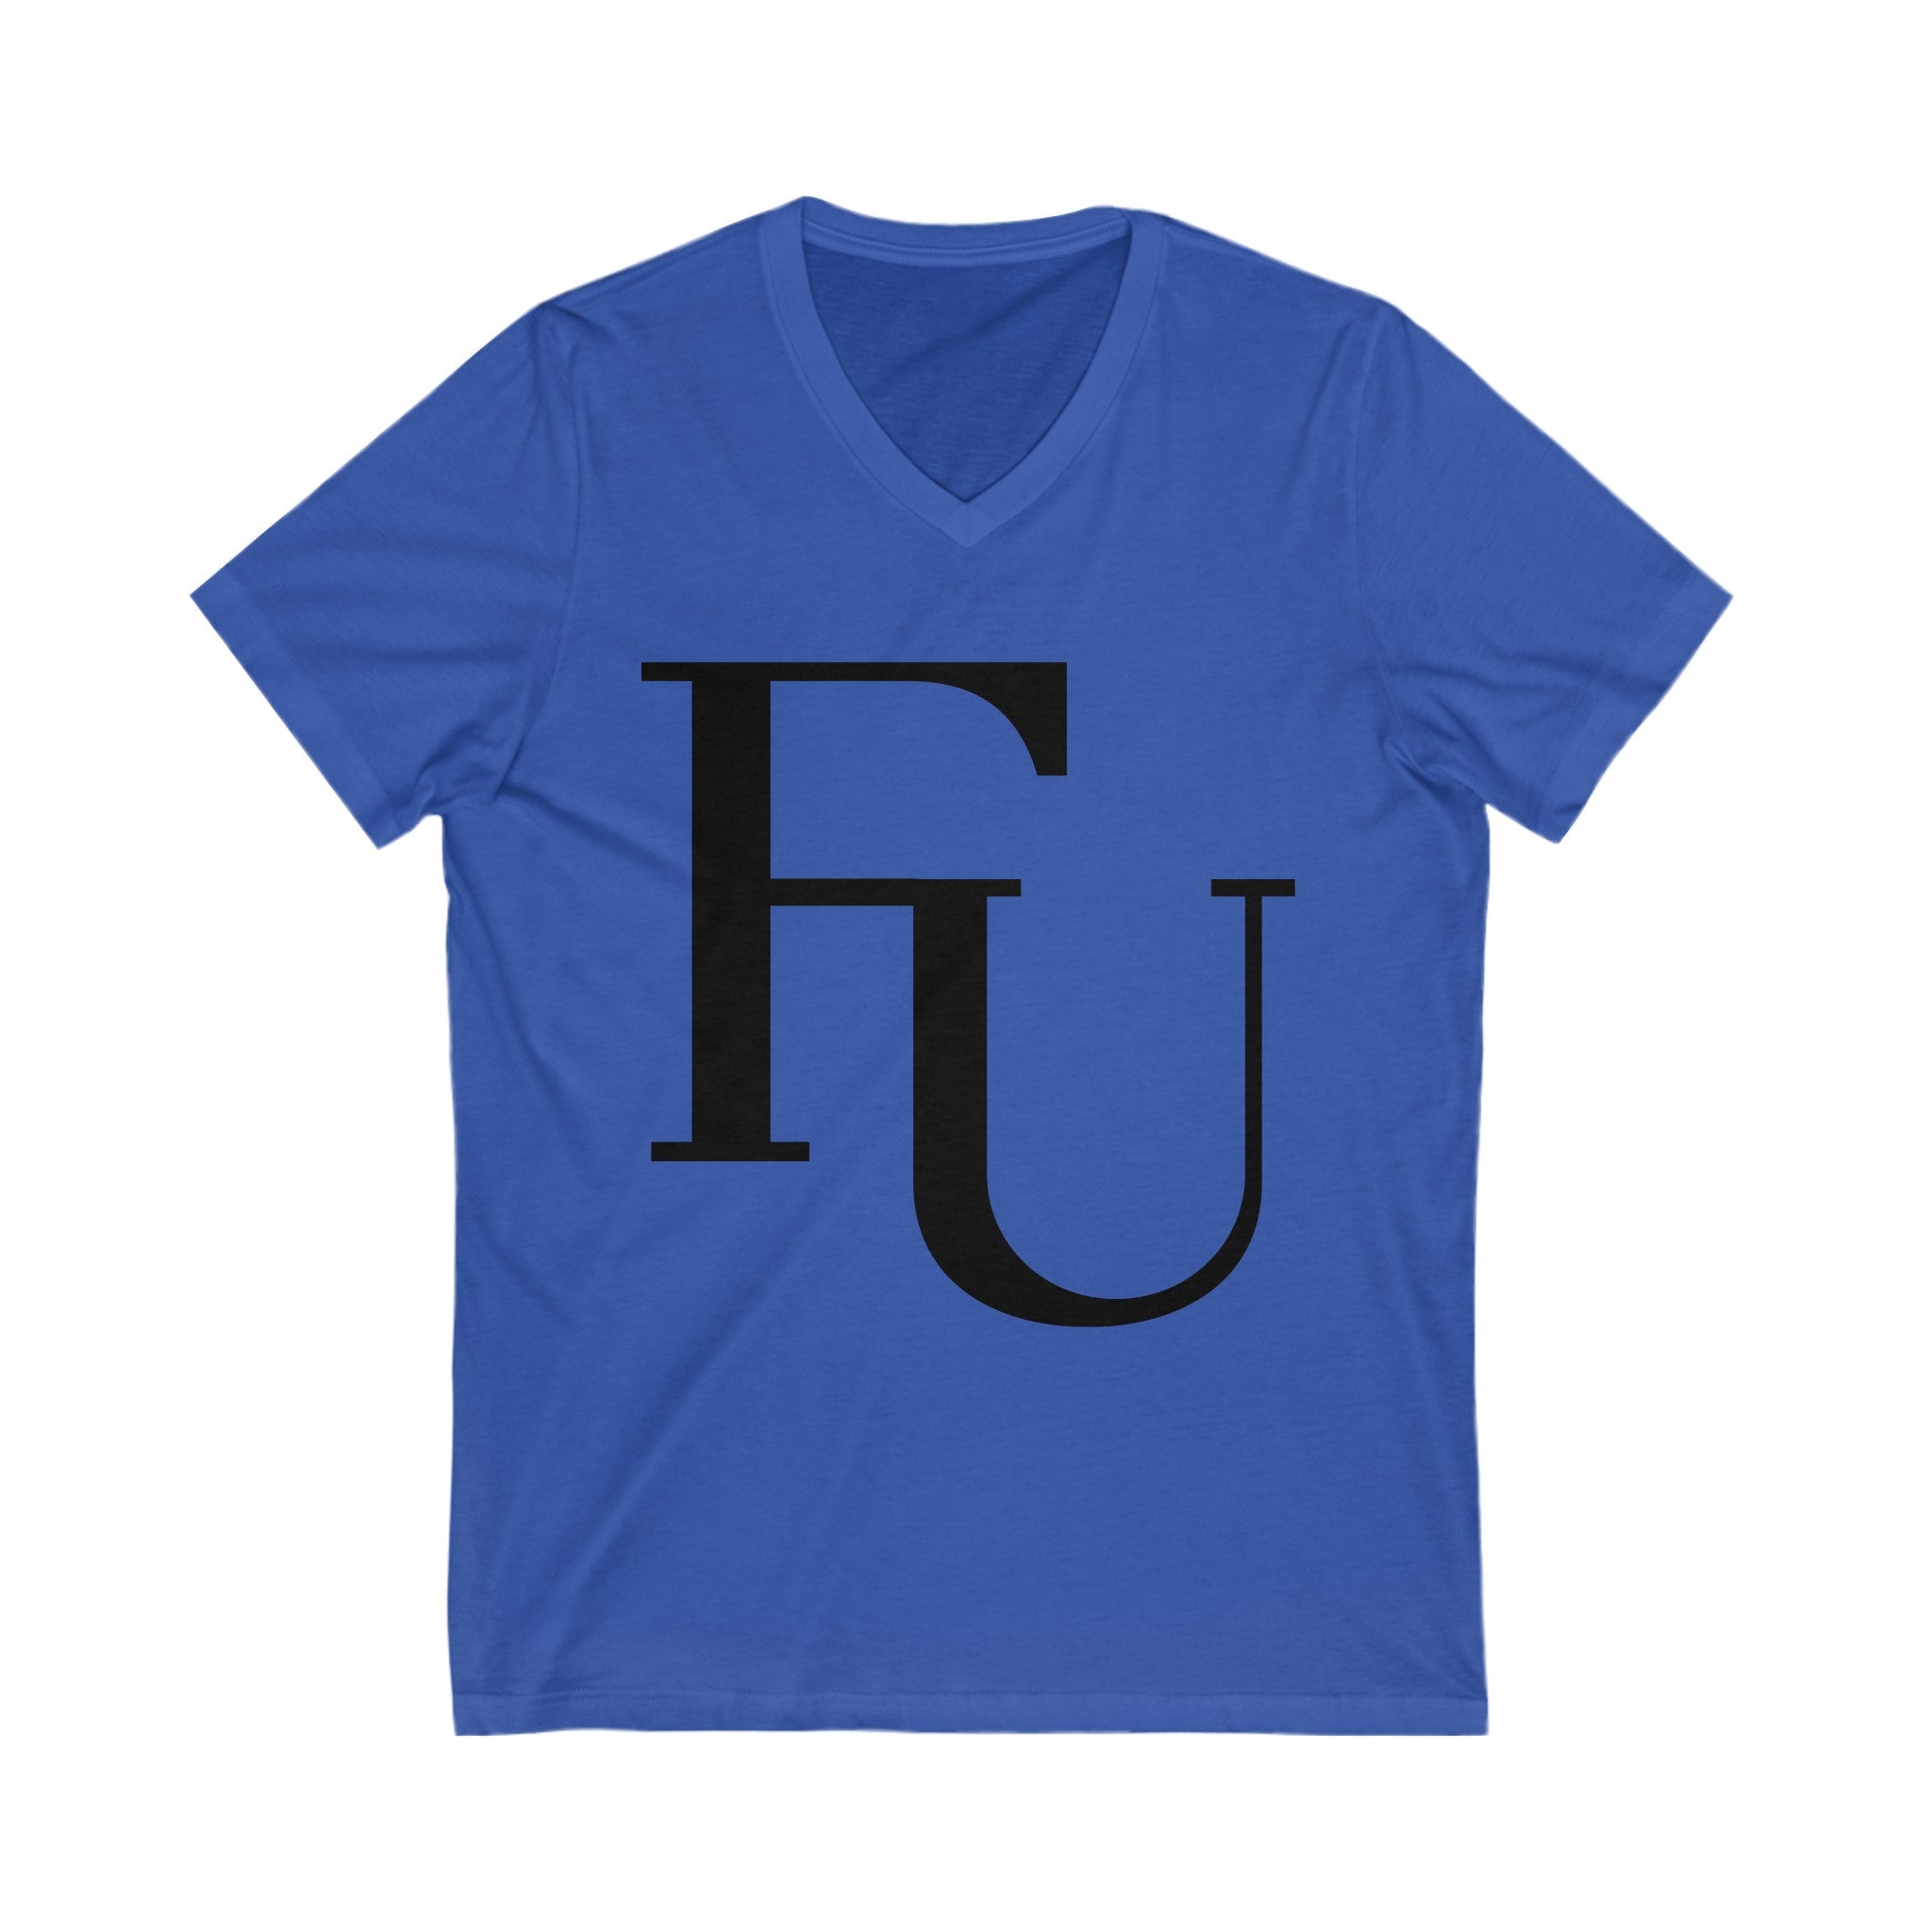 FURDreams “University” VI Short Sleeve V-Neck